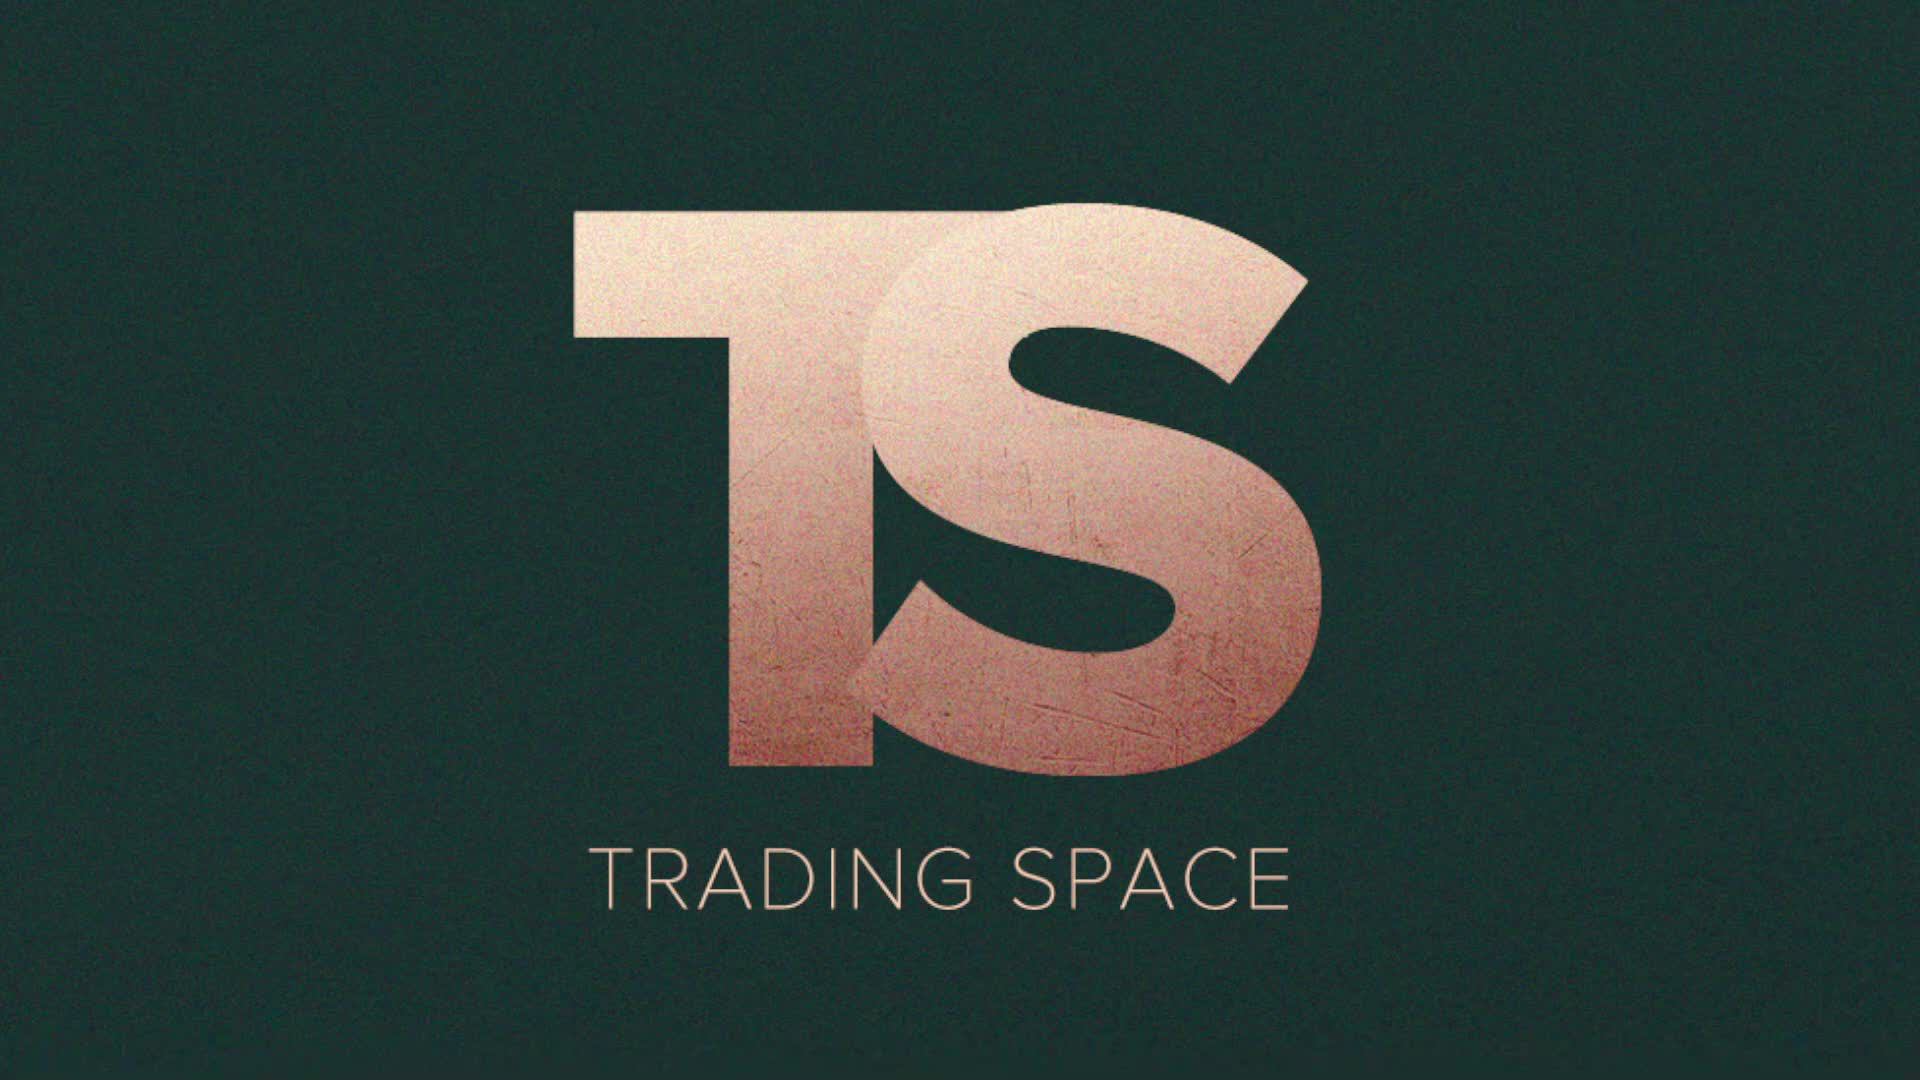 Челлендж со 100$ до 1000$ - торгую Pump & Dump. Читаю чат. #spreadfighter #tradingspace #trading